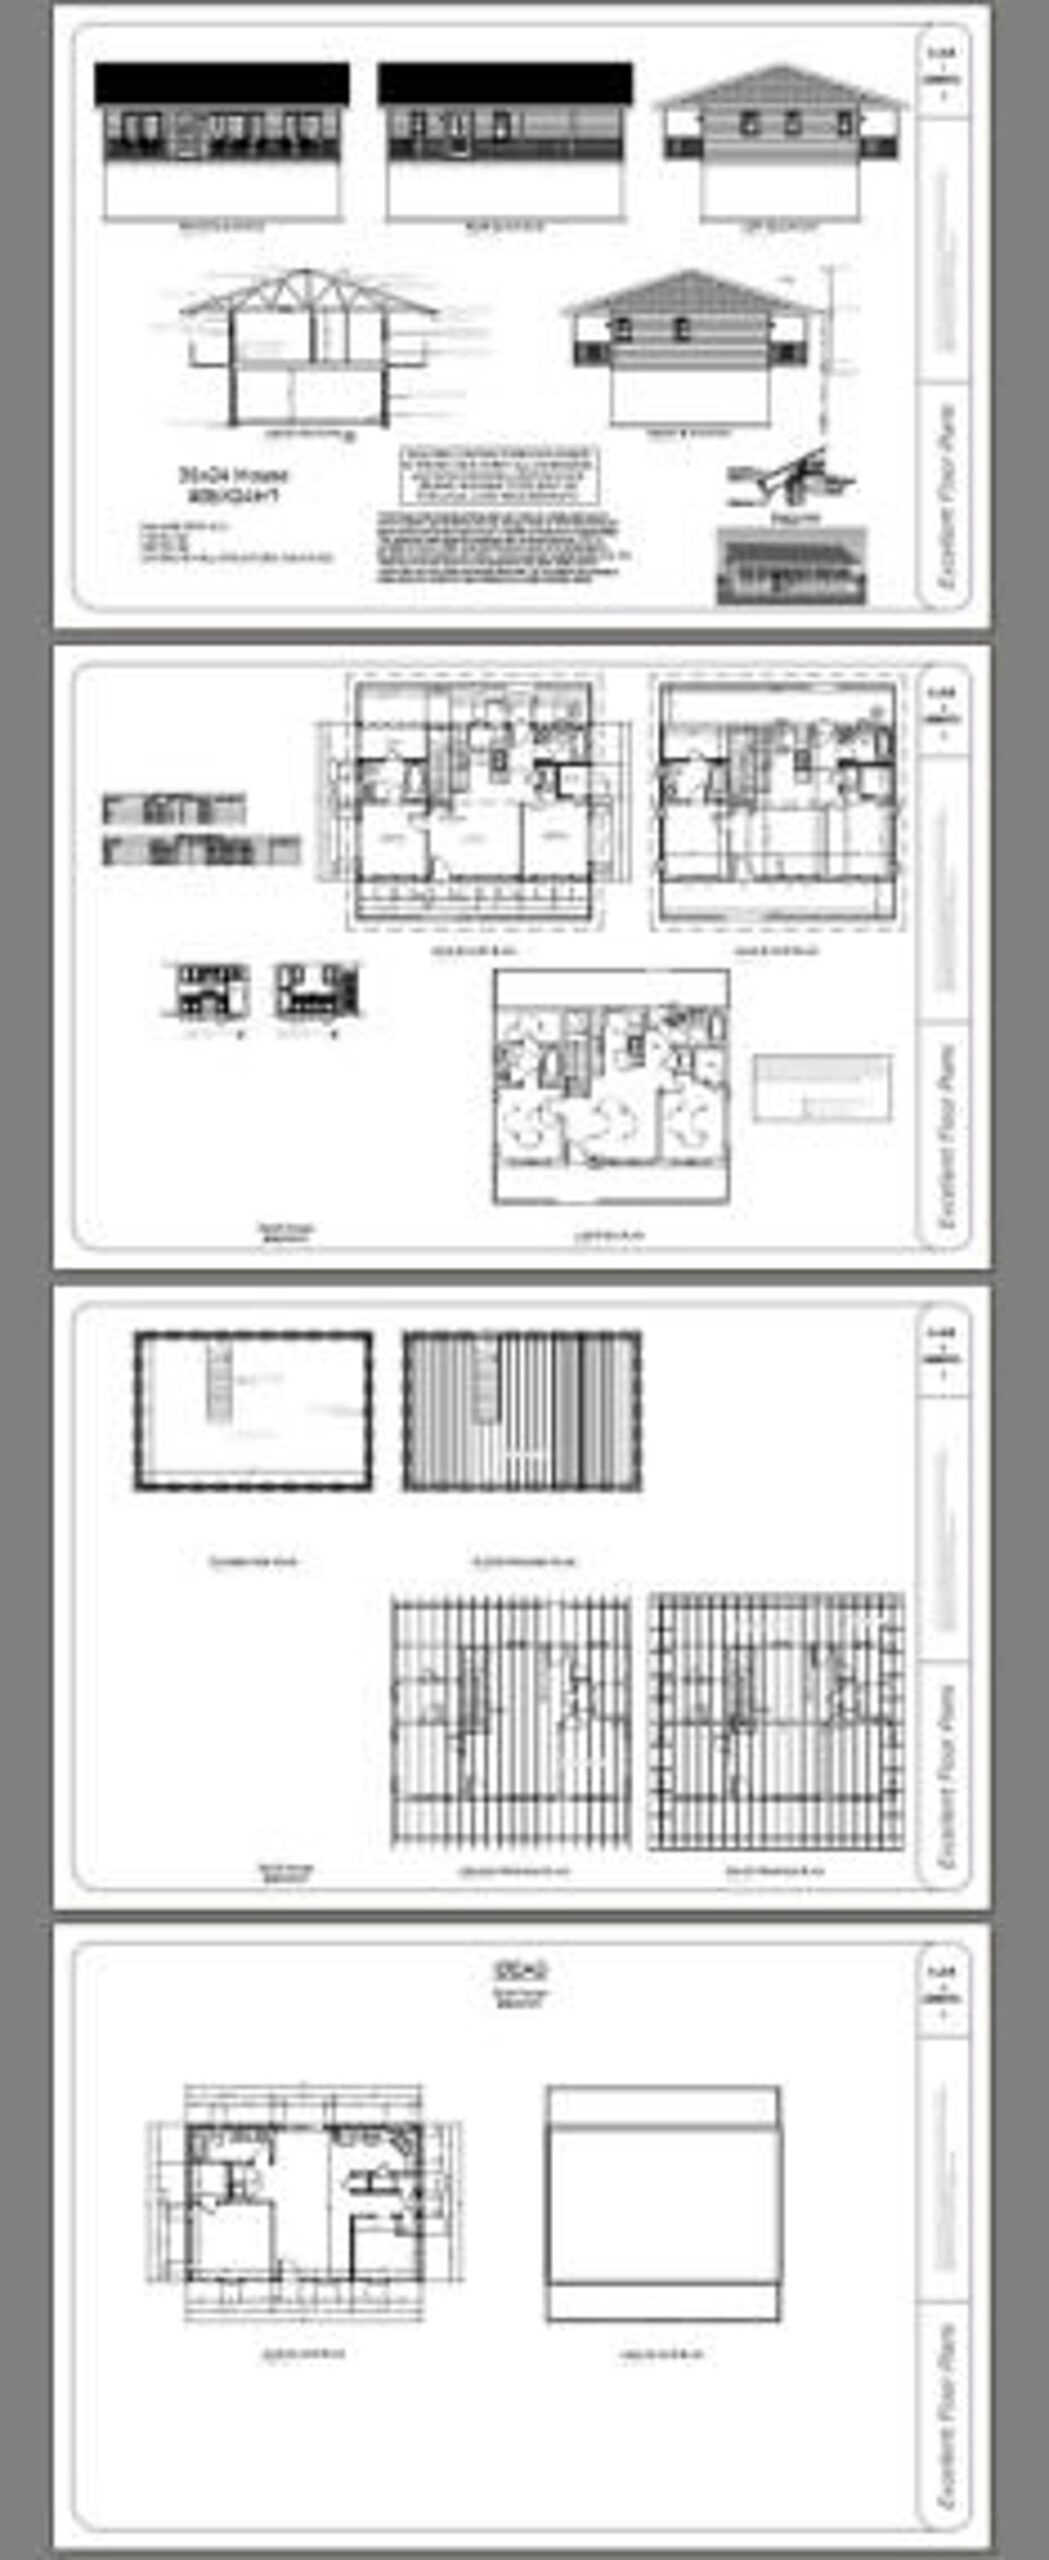 36x24-House-Plan-2-Bedrooms-2-Baths-812-sq-ft-PDF-Floor-Plan-all